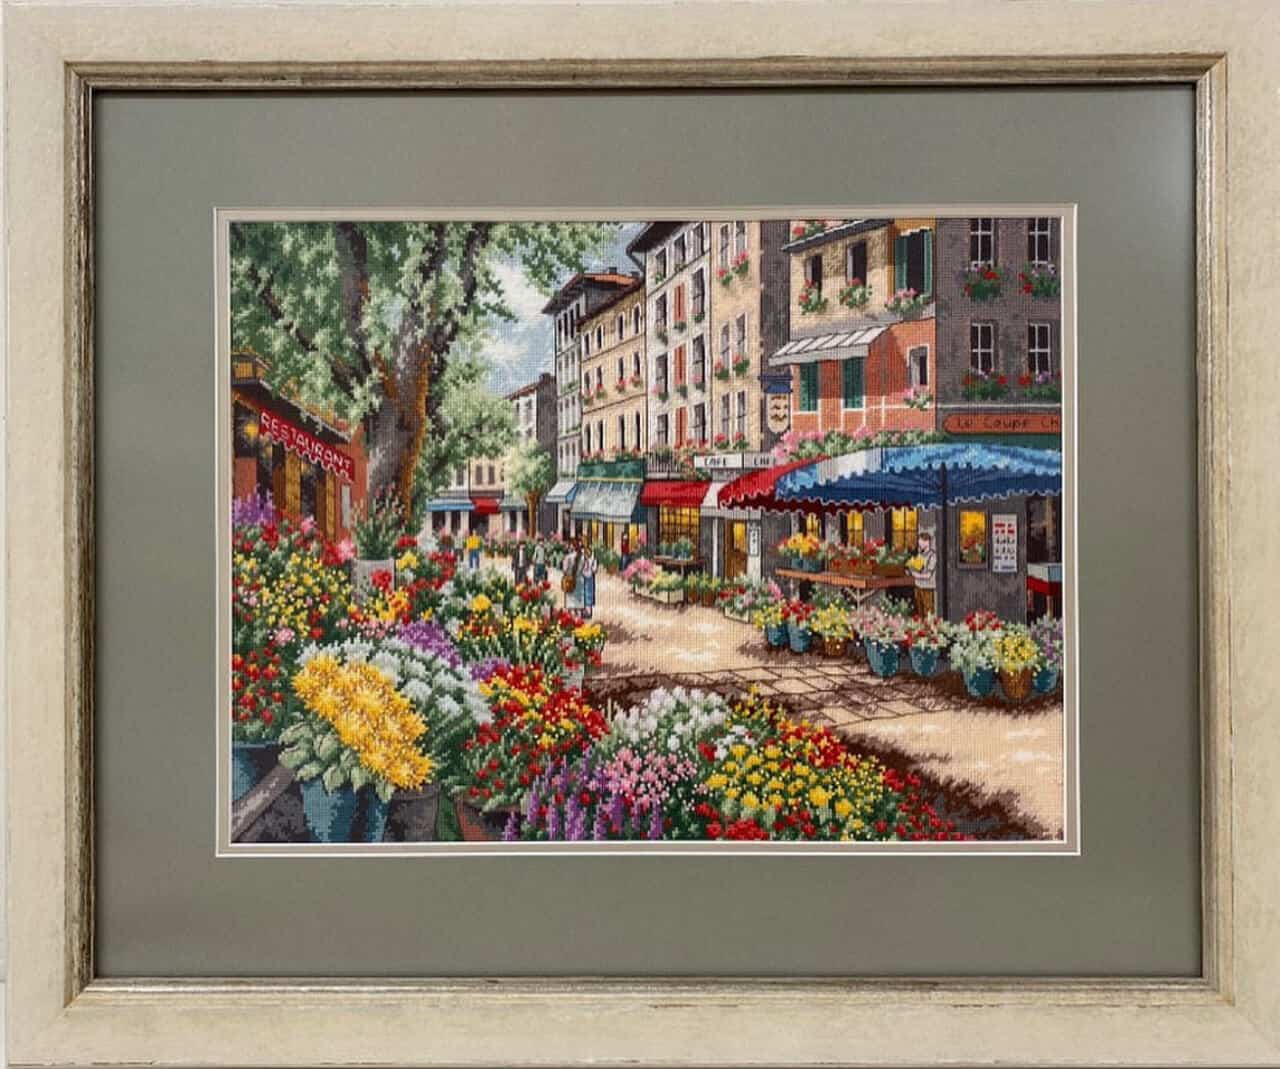 A framed cross-stitch of a flower market in paris.